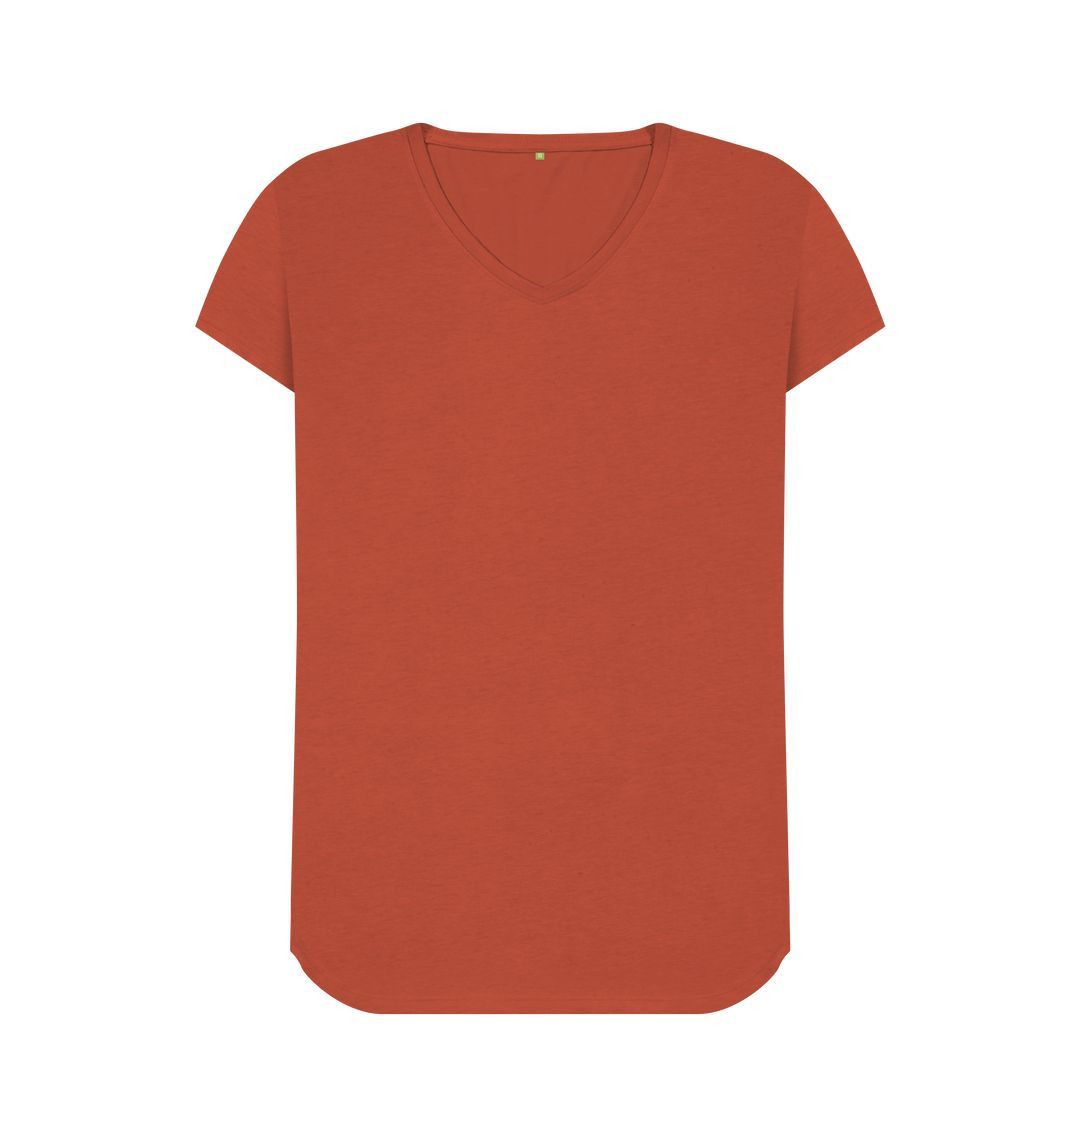 Rust Women's organic cotton v-neck t-shirt